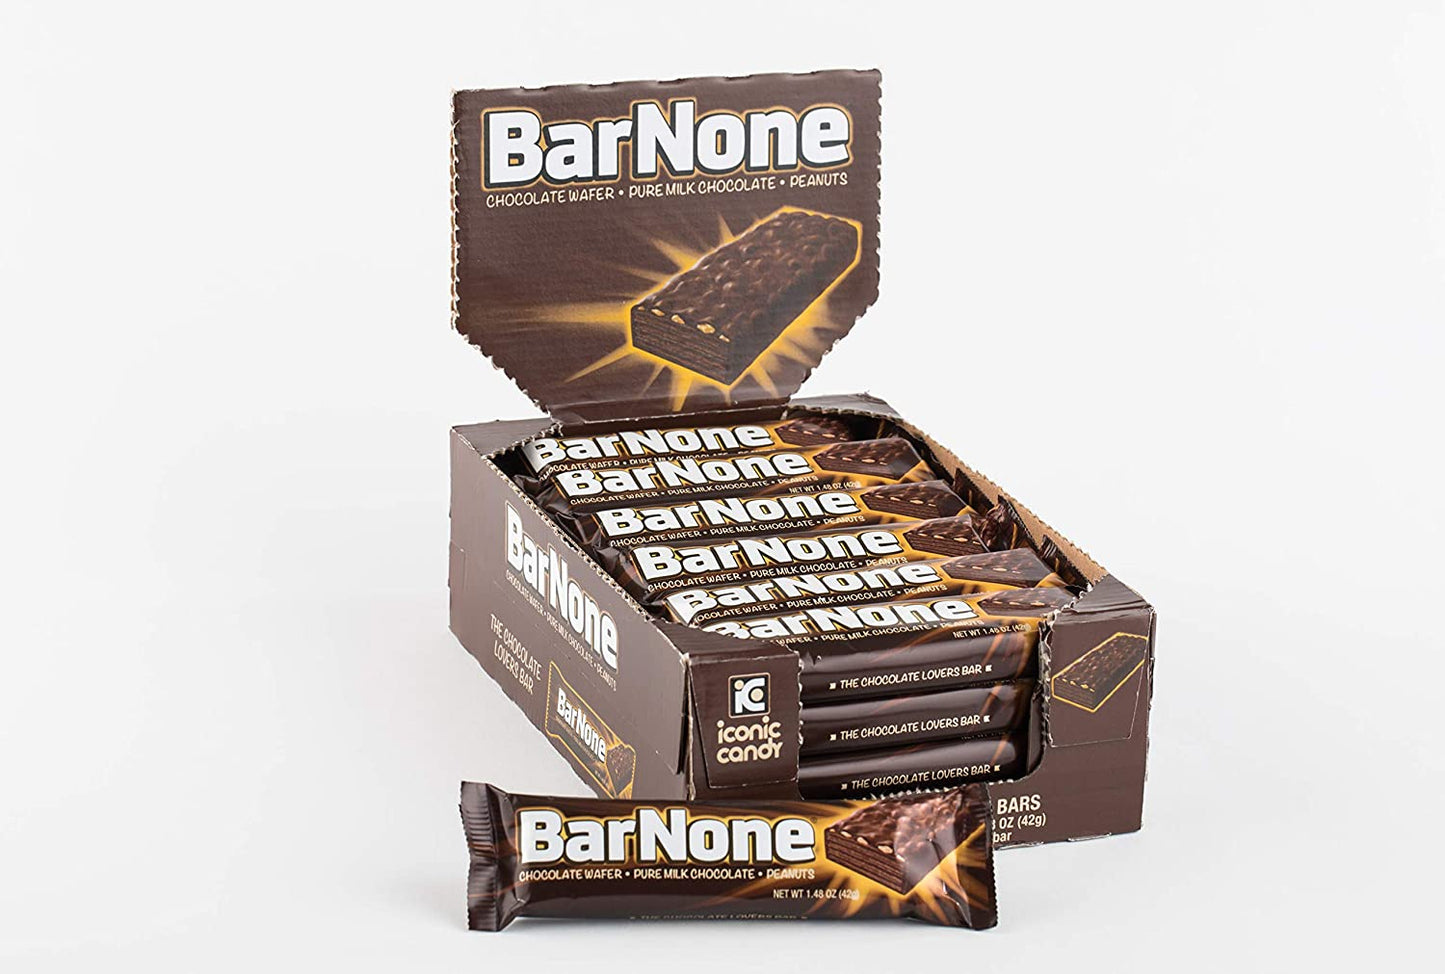 BarNone Chocolate Bar | Chocolate Wafer – Pure Milk Chocolate - Peanuts | A Chocolate Lover’s Candy Bar | BarNone Chocolate Bar - 24 Count